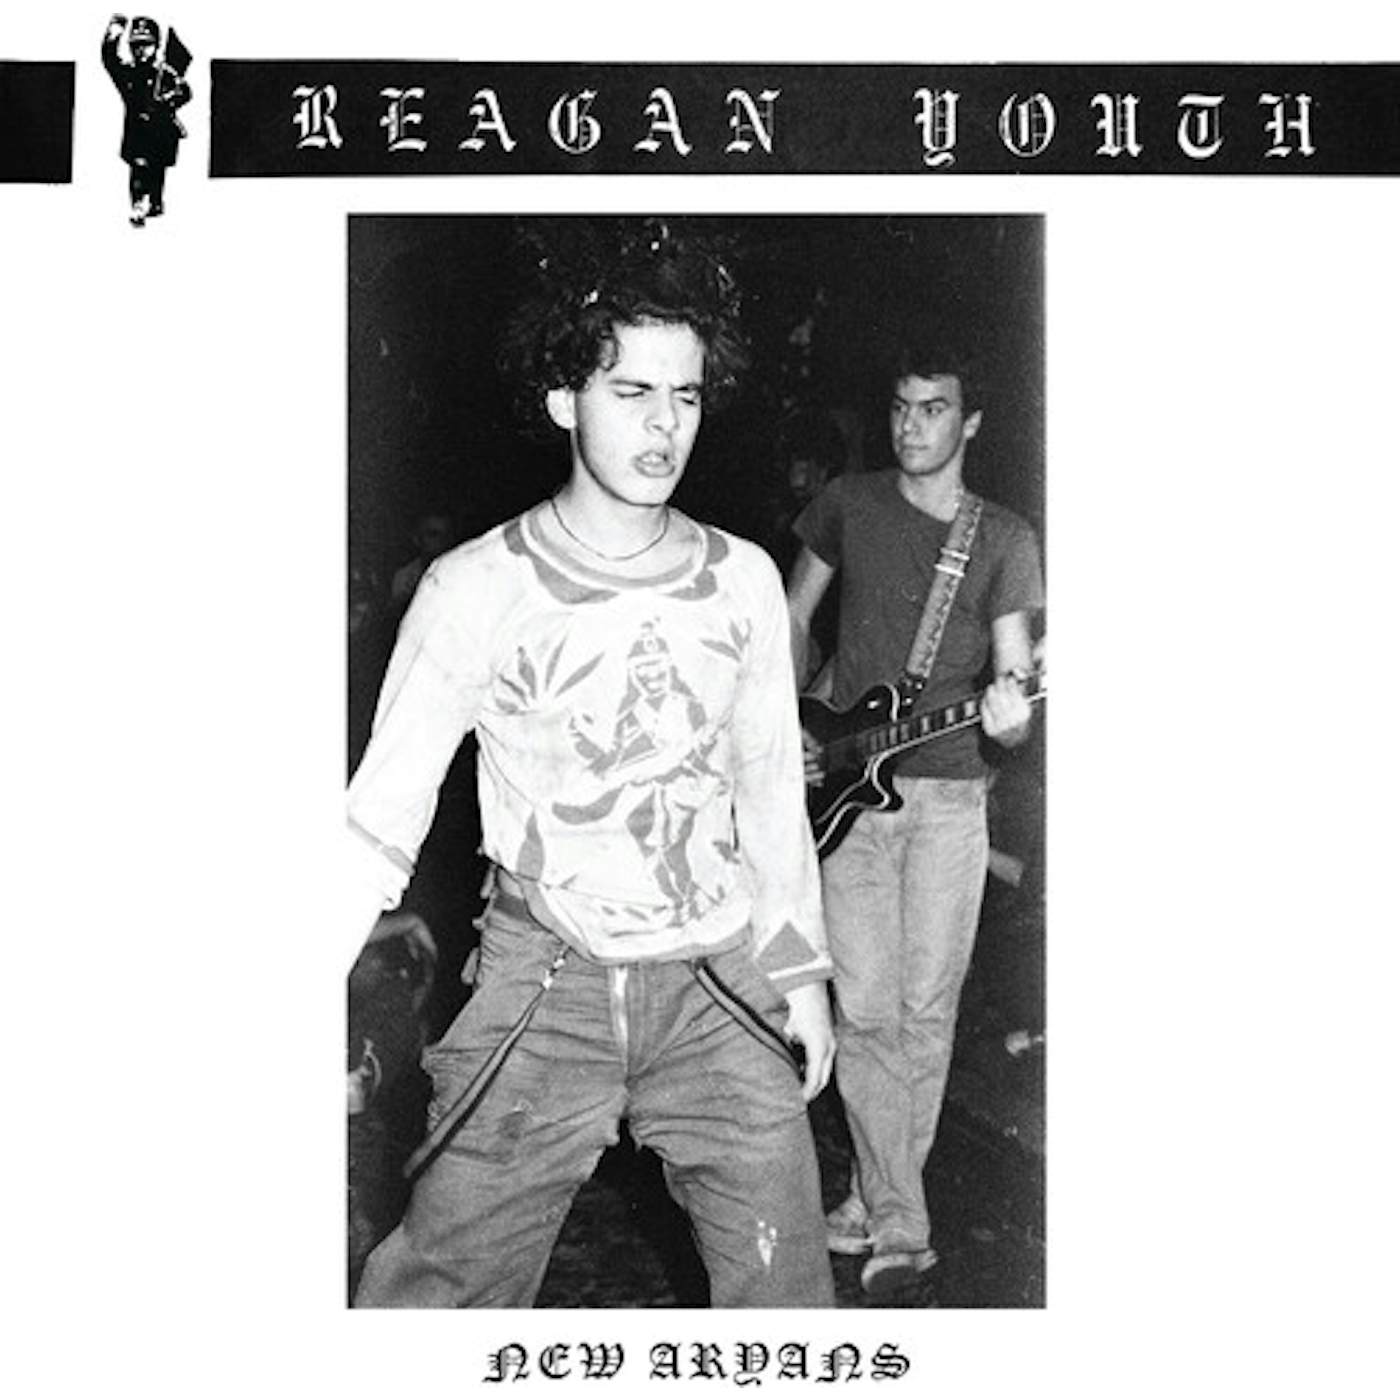 Reagan Youth NEW ARYANS - PURPLE Vinyl Record